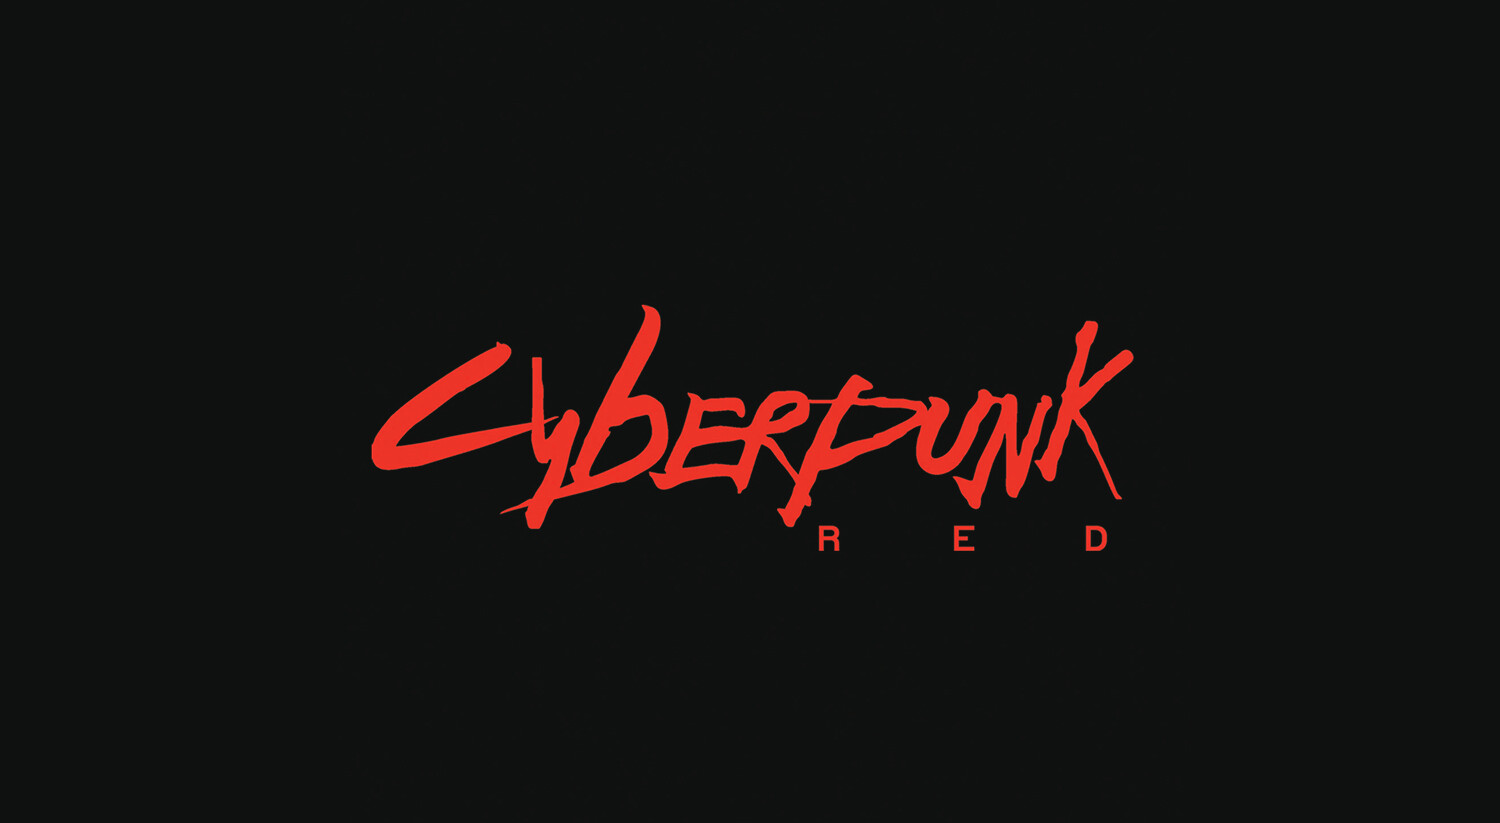 Cyberpunk logo wallpaper фото 87